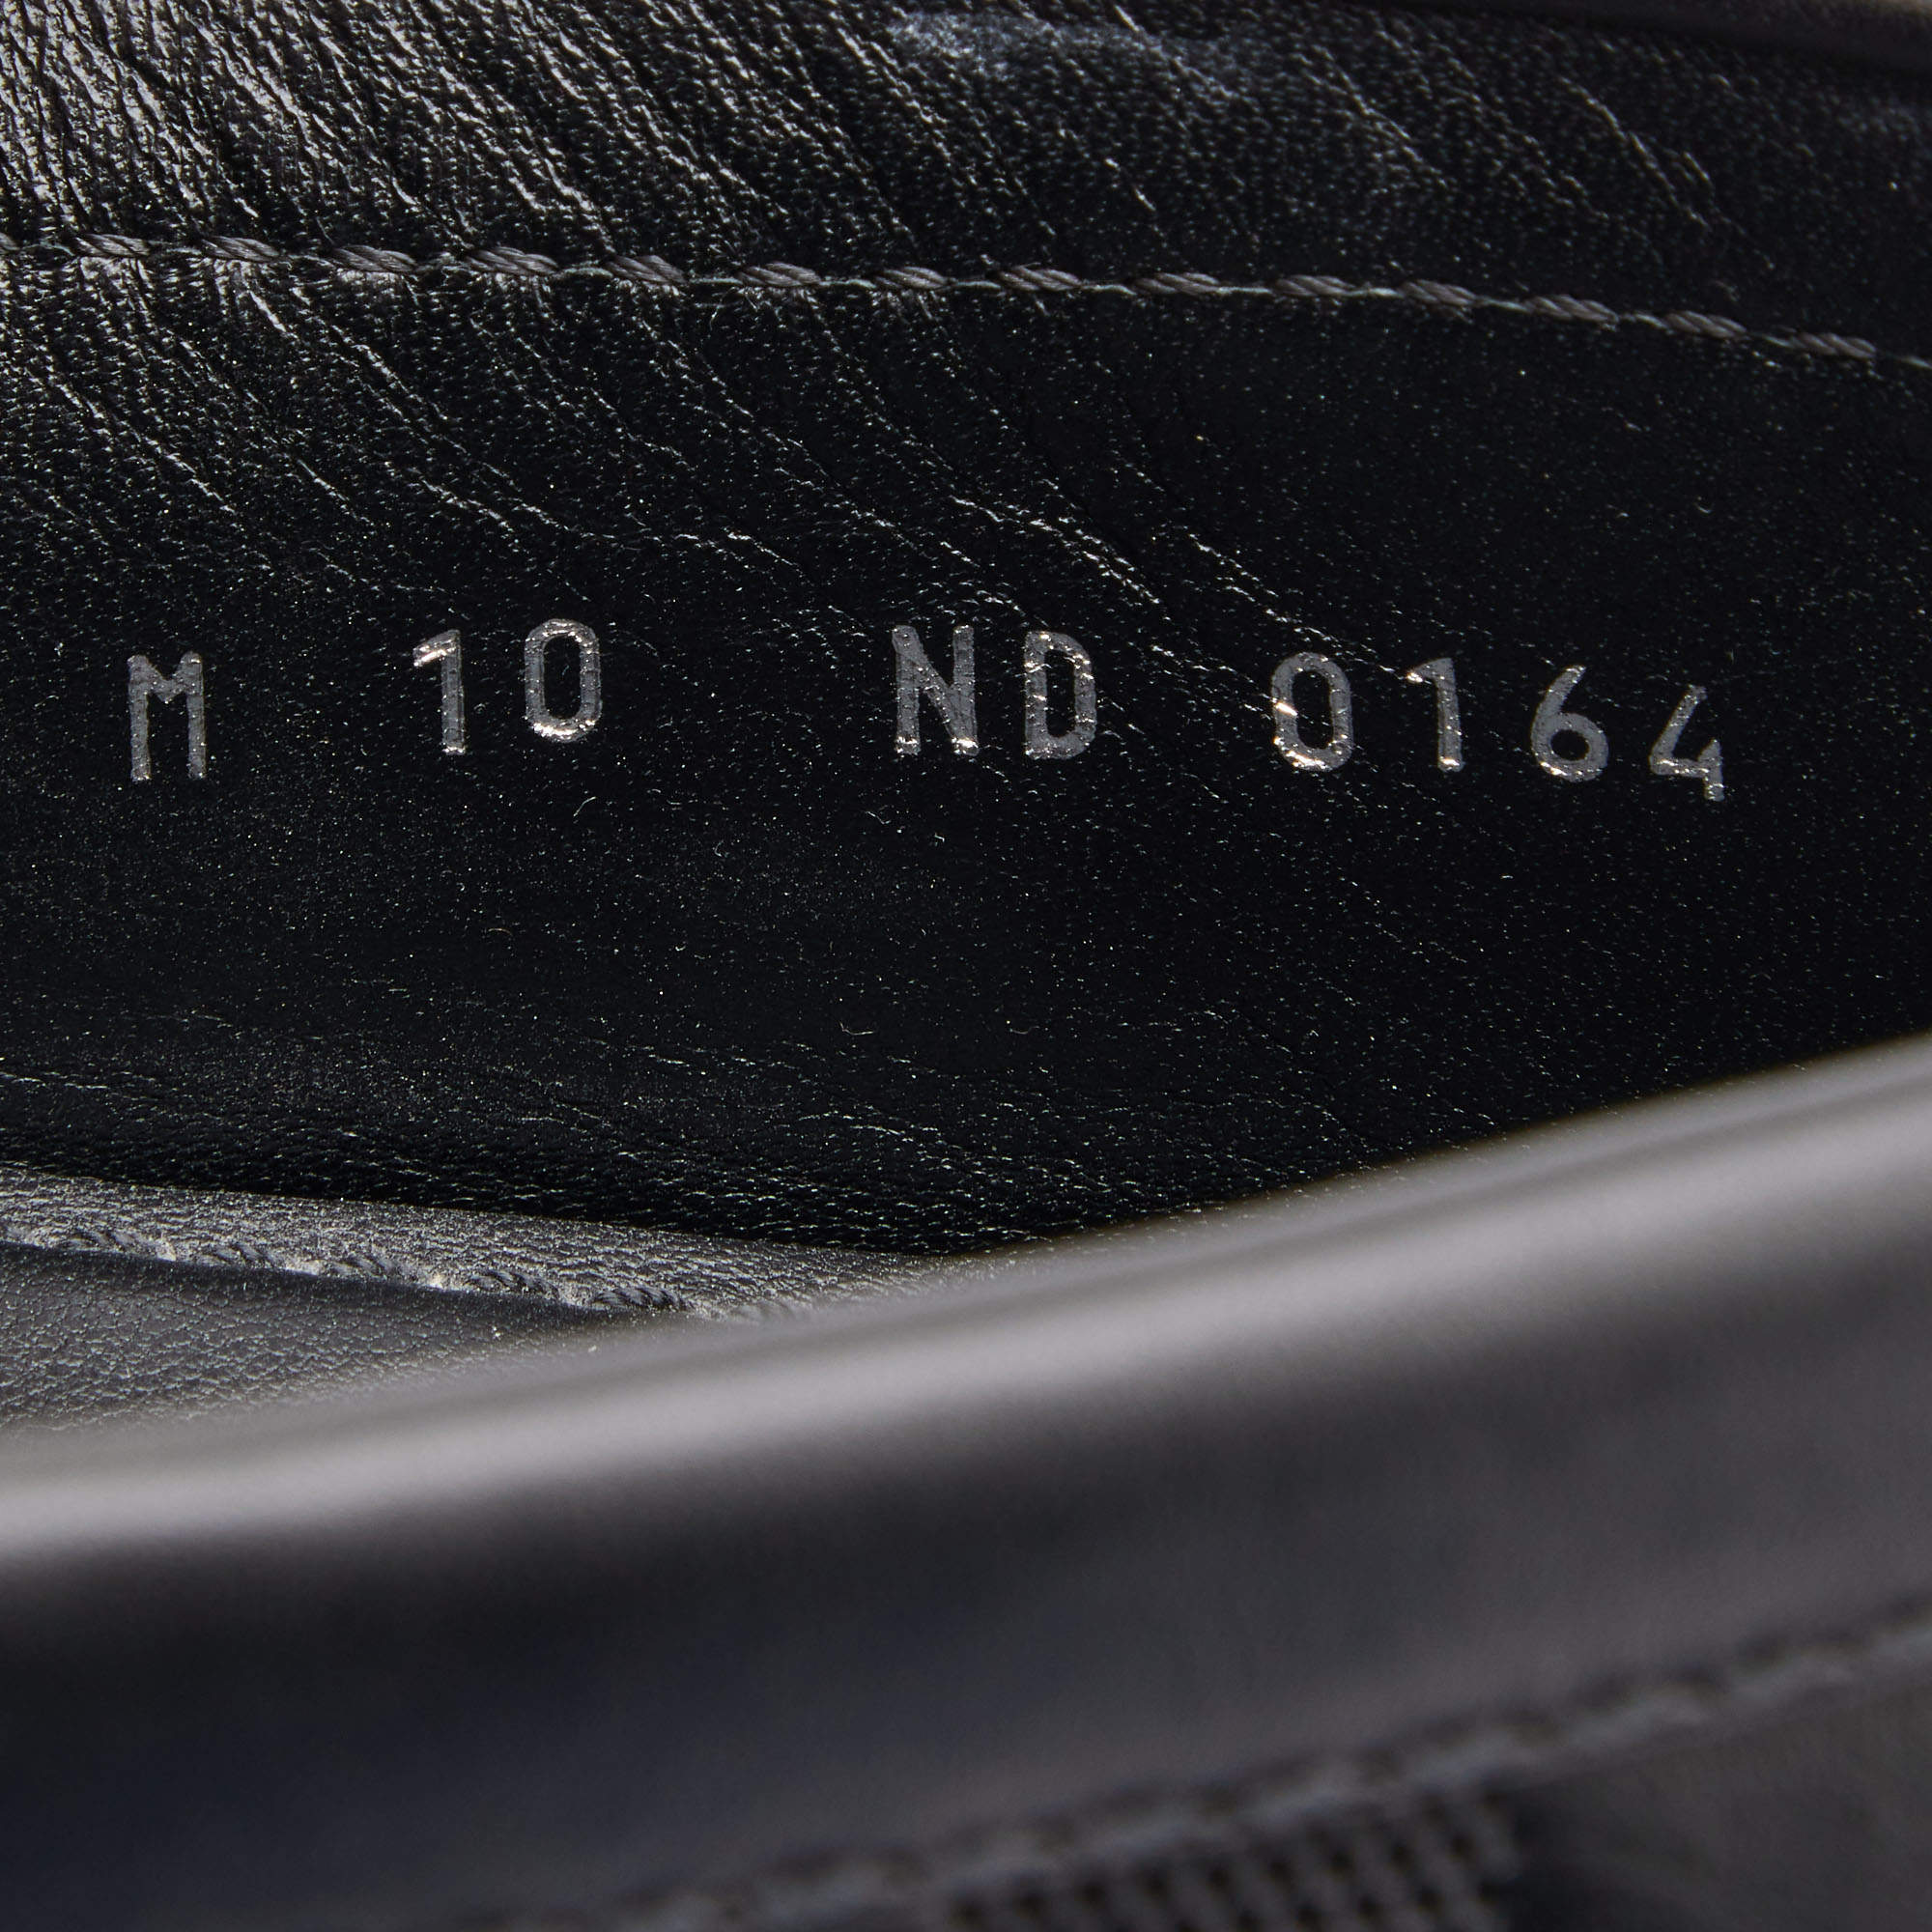 Louis Vuitton Black Damier Infini Leather Hockenheim Slip On Loafers Size  44 Louis Vuitton